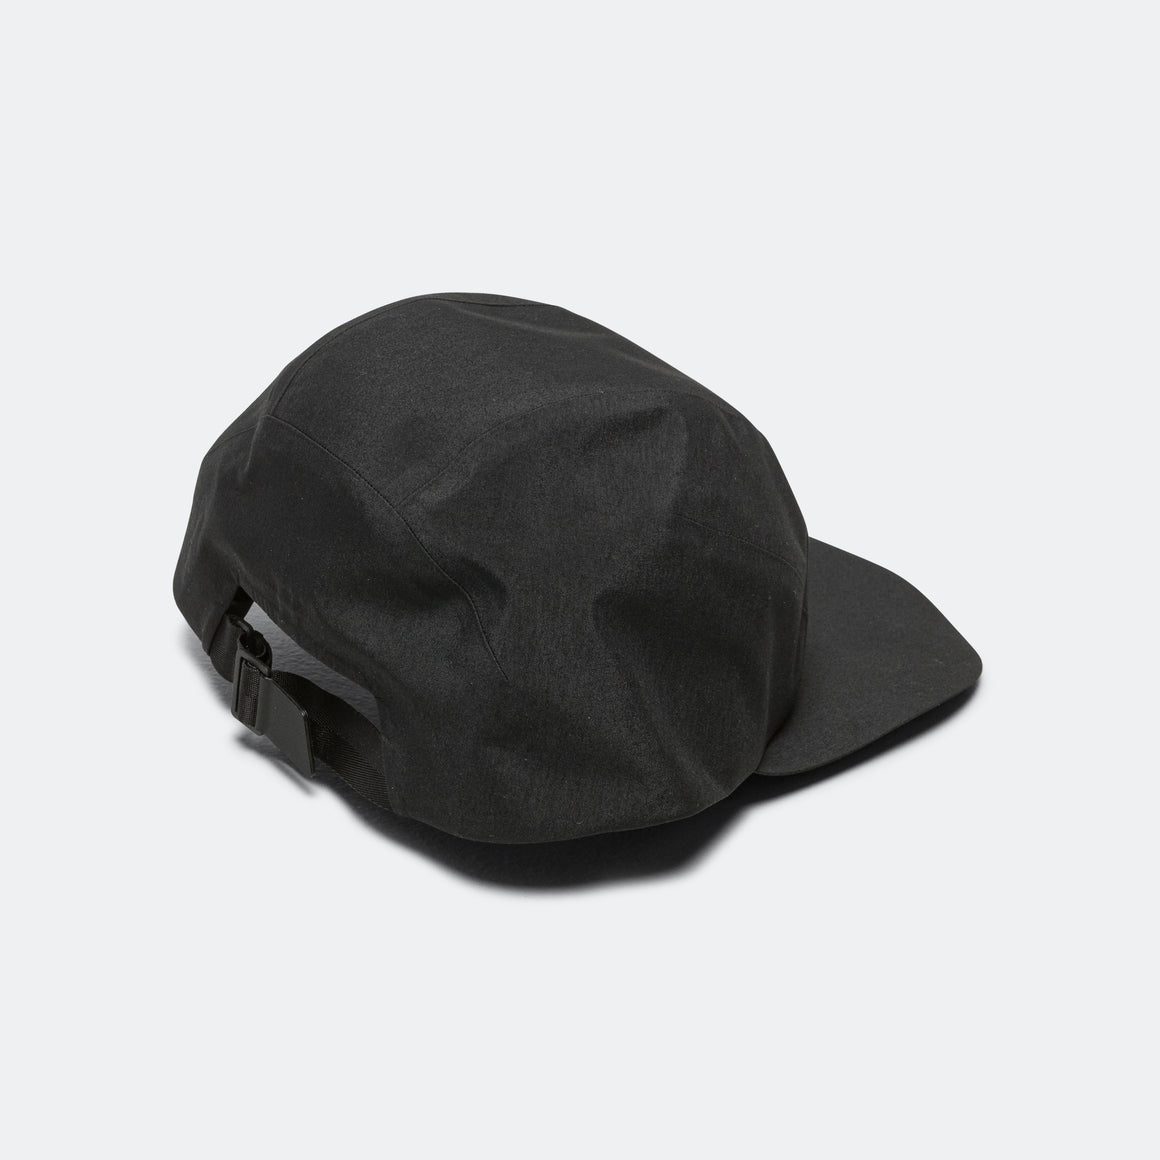 Stealth Cap - Black/Black